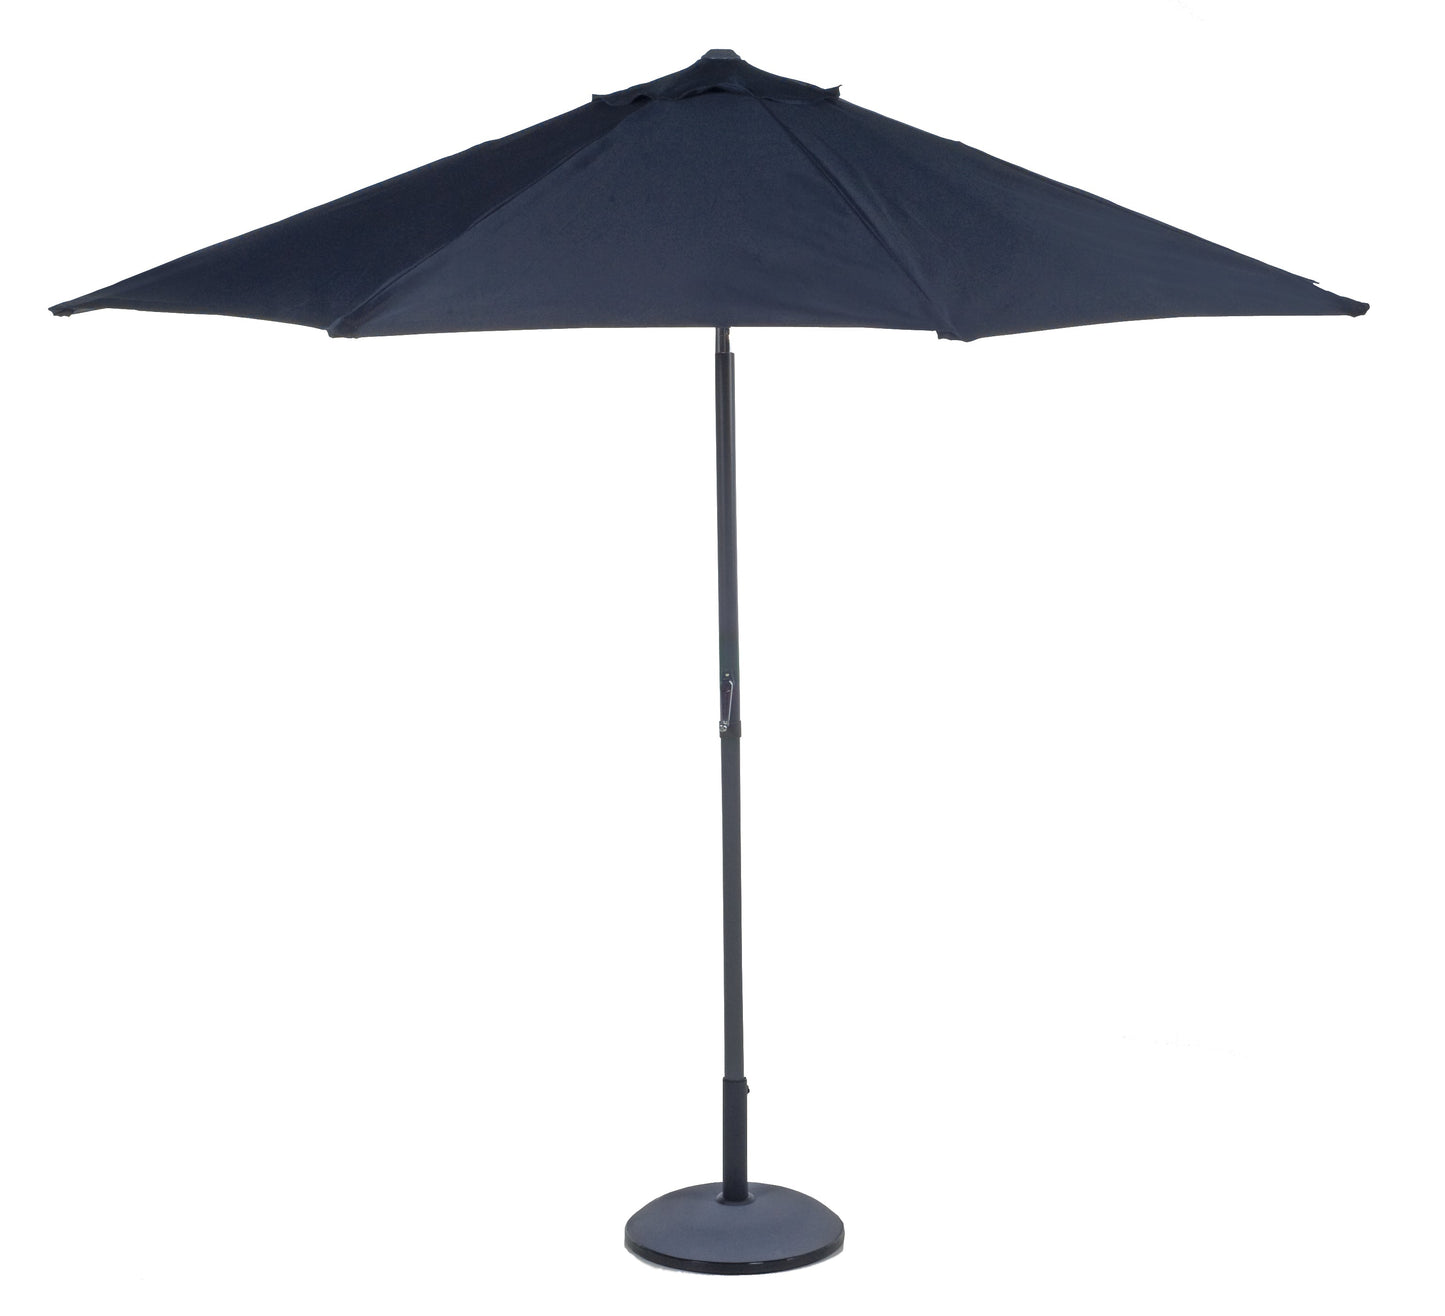 Lifetime garden parasol - Stokparasol - Ø 300 cm - Zwart - Bivakshop